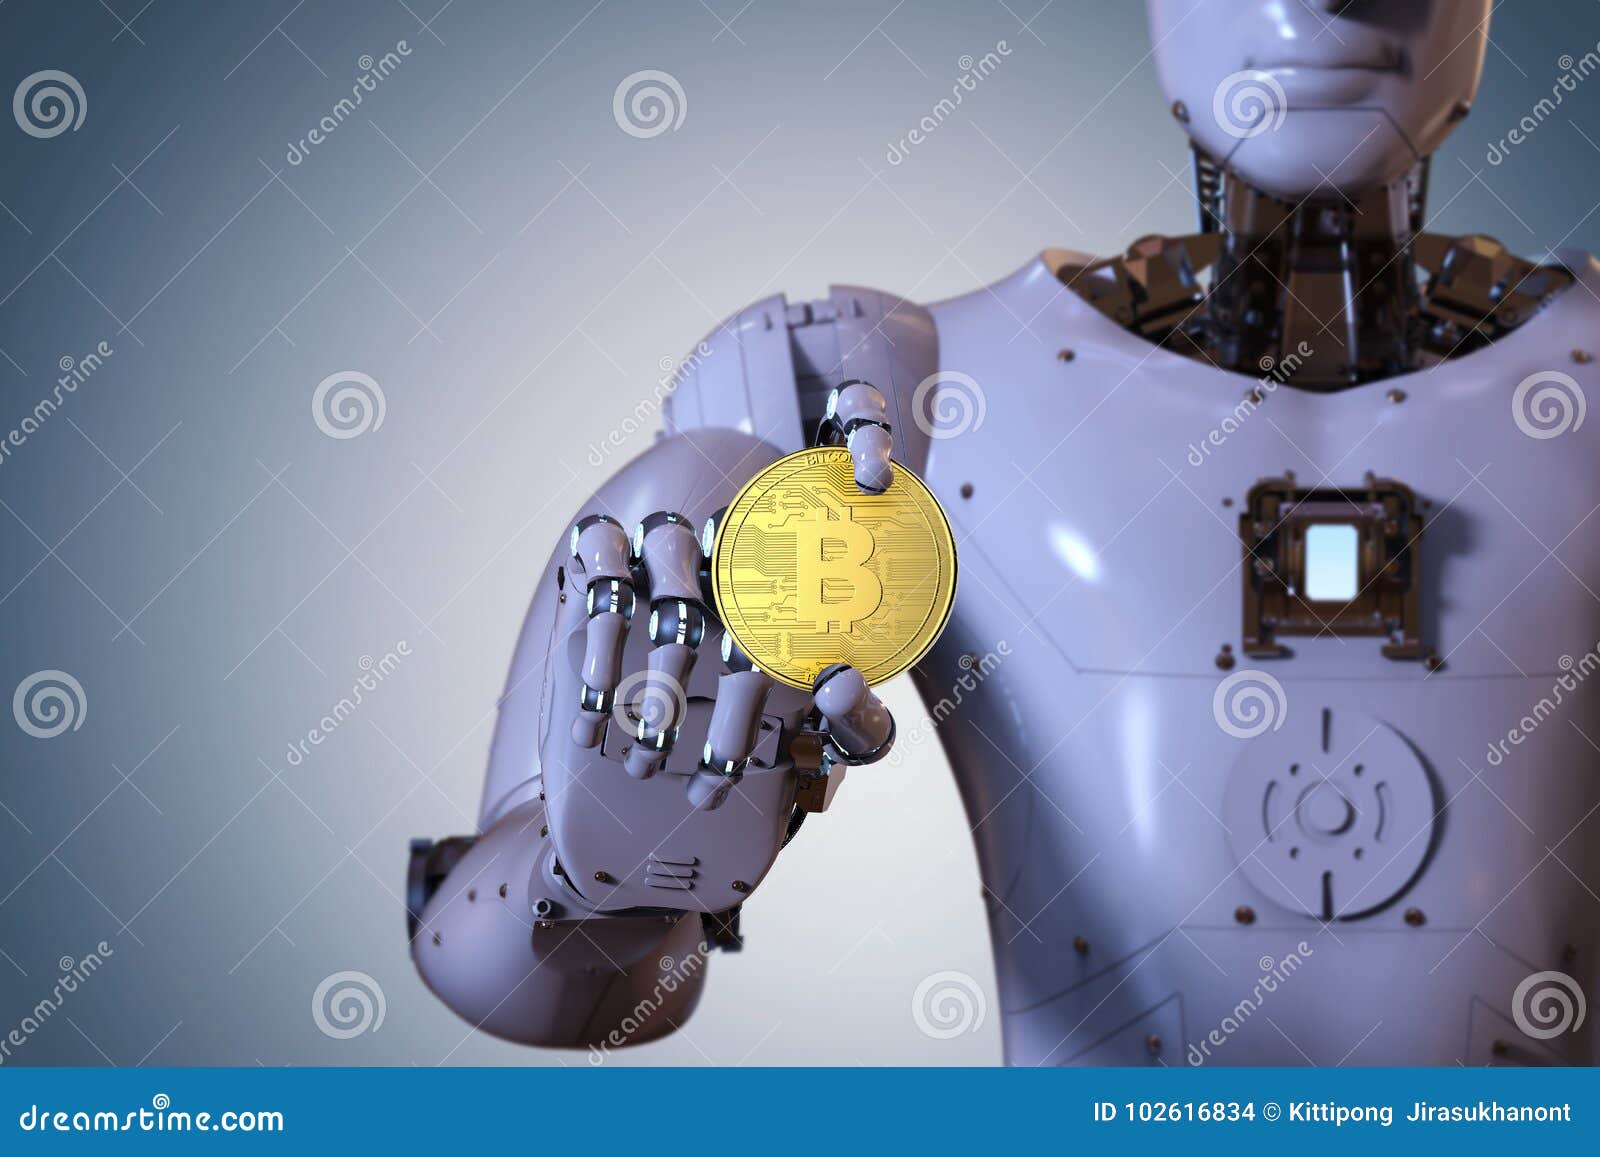 bitcoin robot paypal bitcoin támogatás